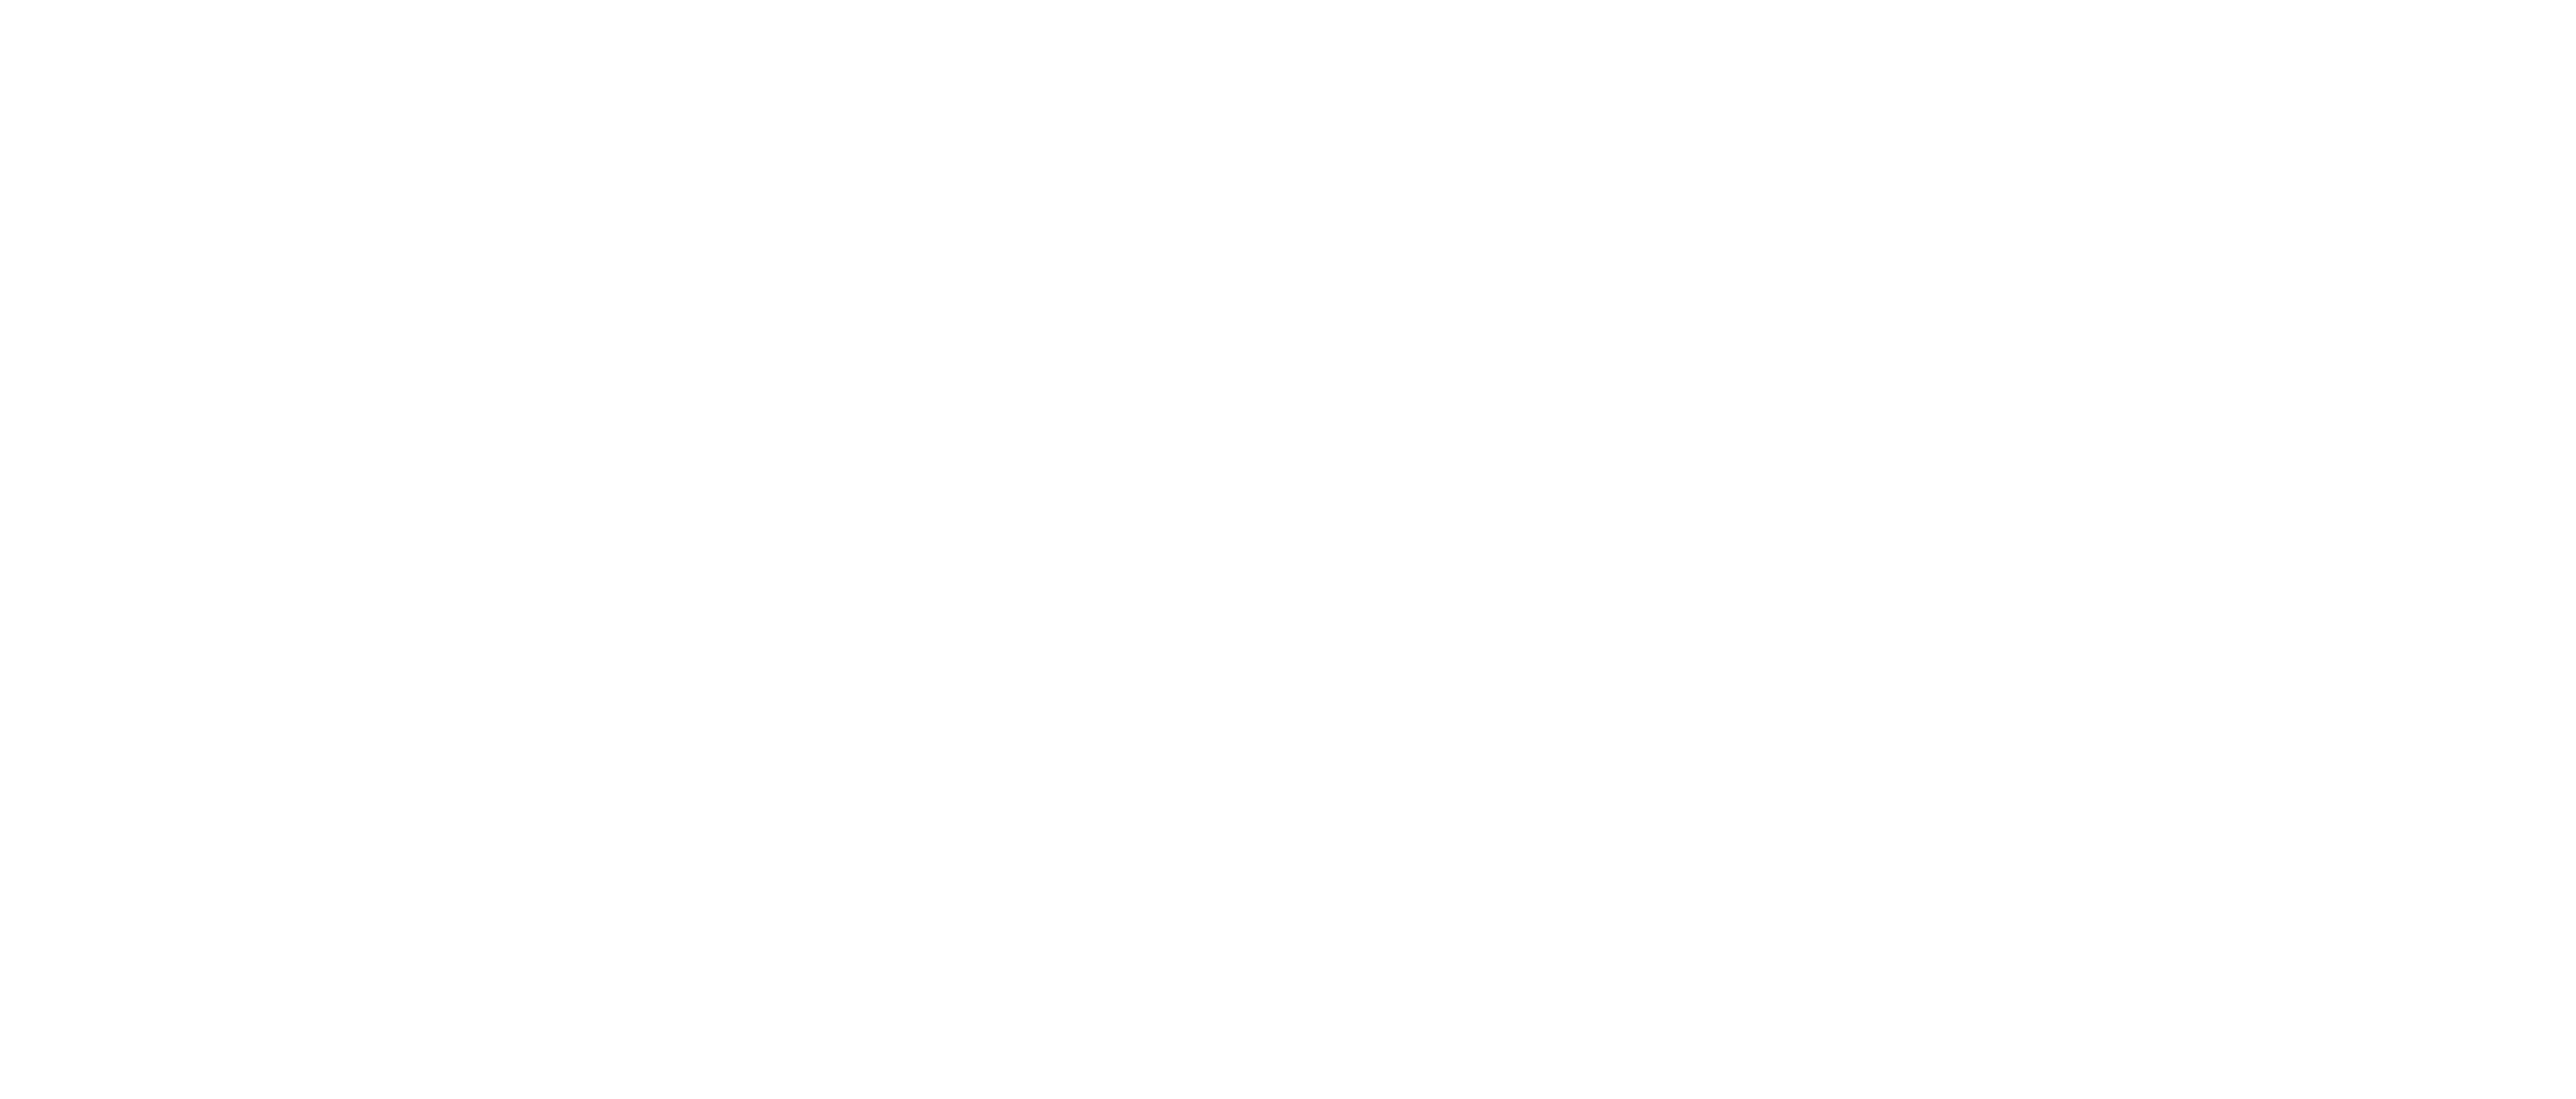 Swapfiets bike hire logo